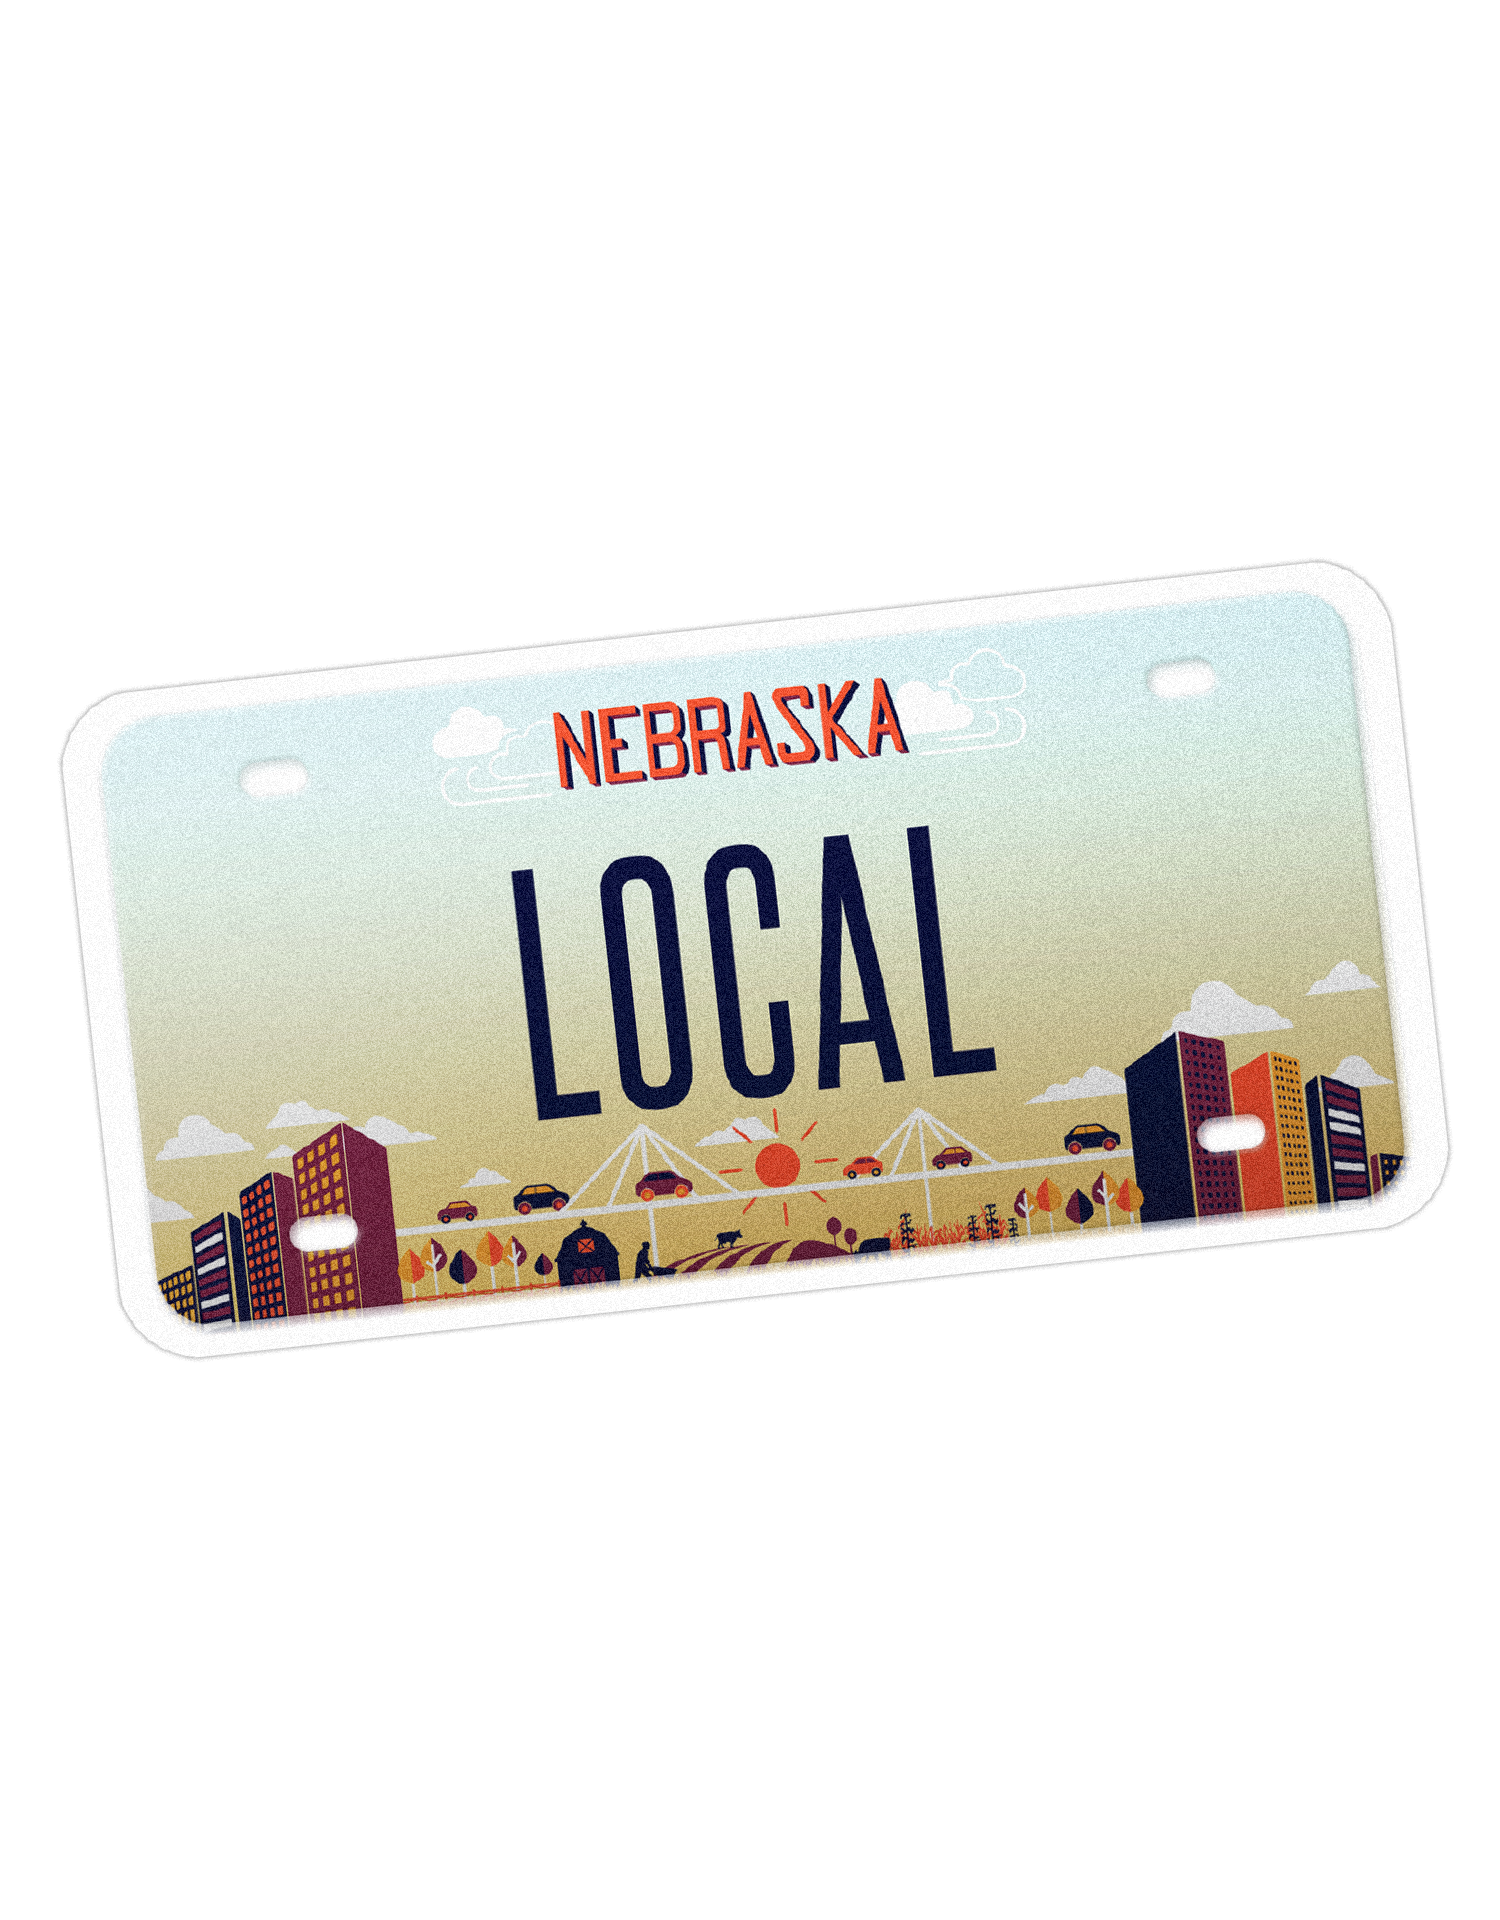 Nebraska-Local.png